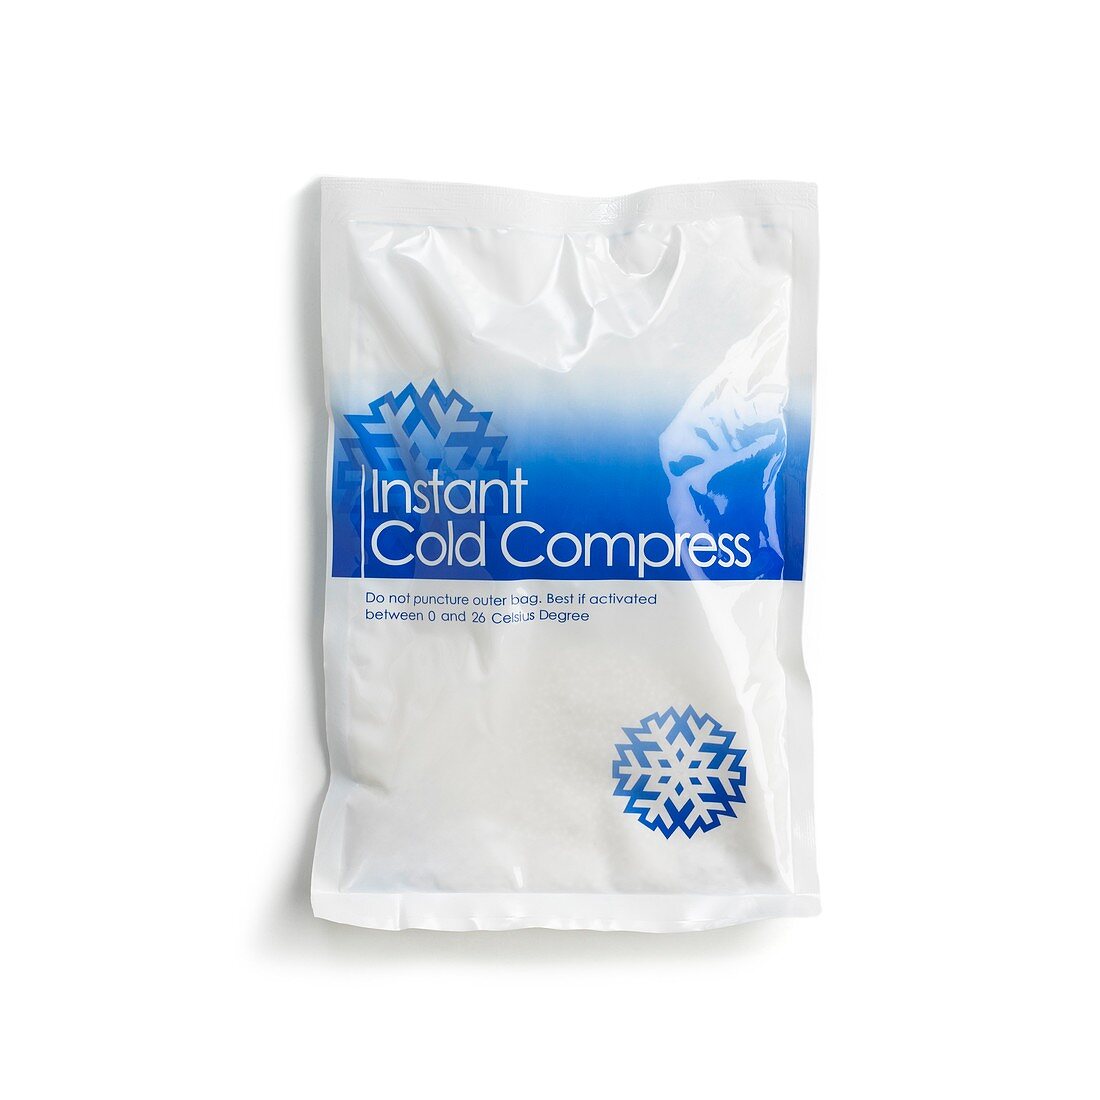 Cold compress anti-inflammatory